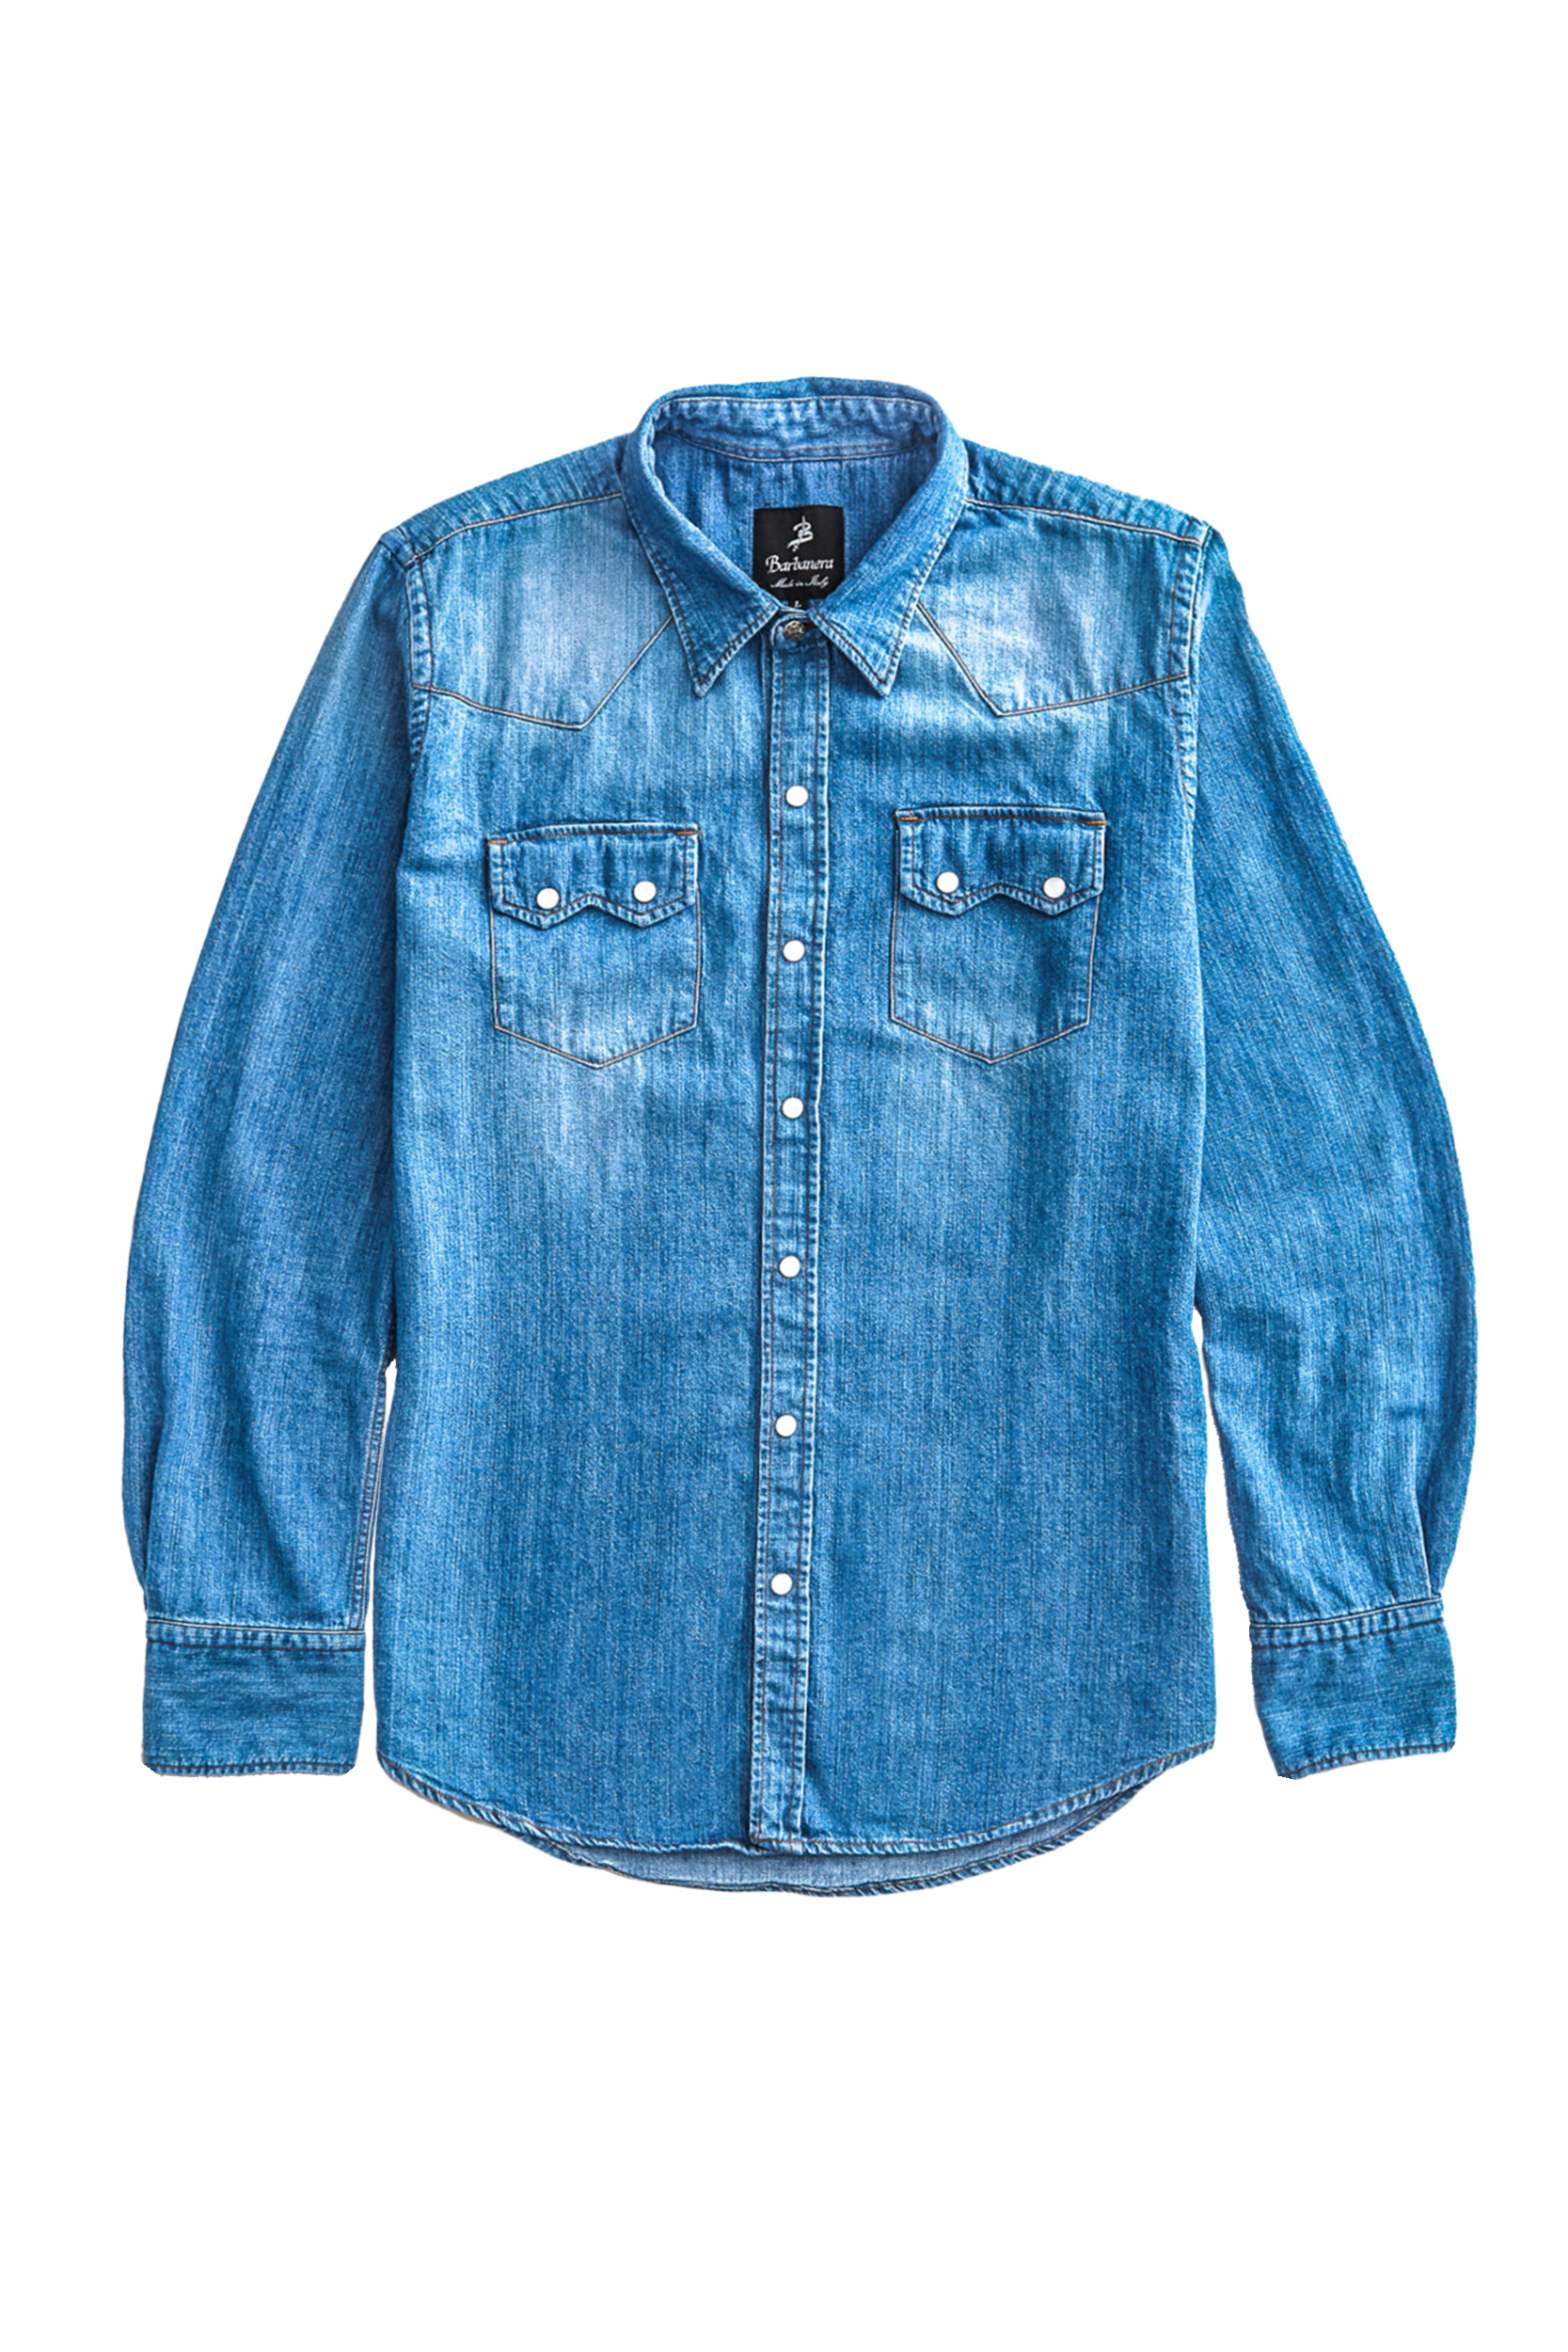 NEW Women Denim Shirt Ladies Classic Fitted Shirts Size 12 14 16 18 Blue  jean | eBay